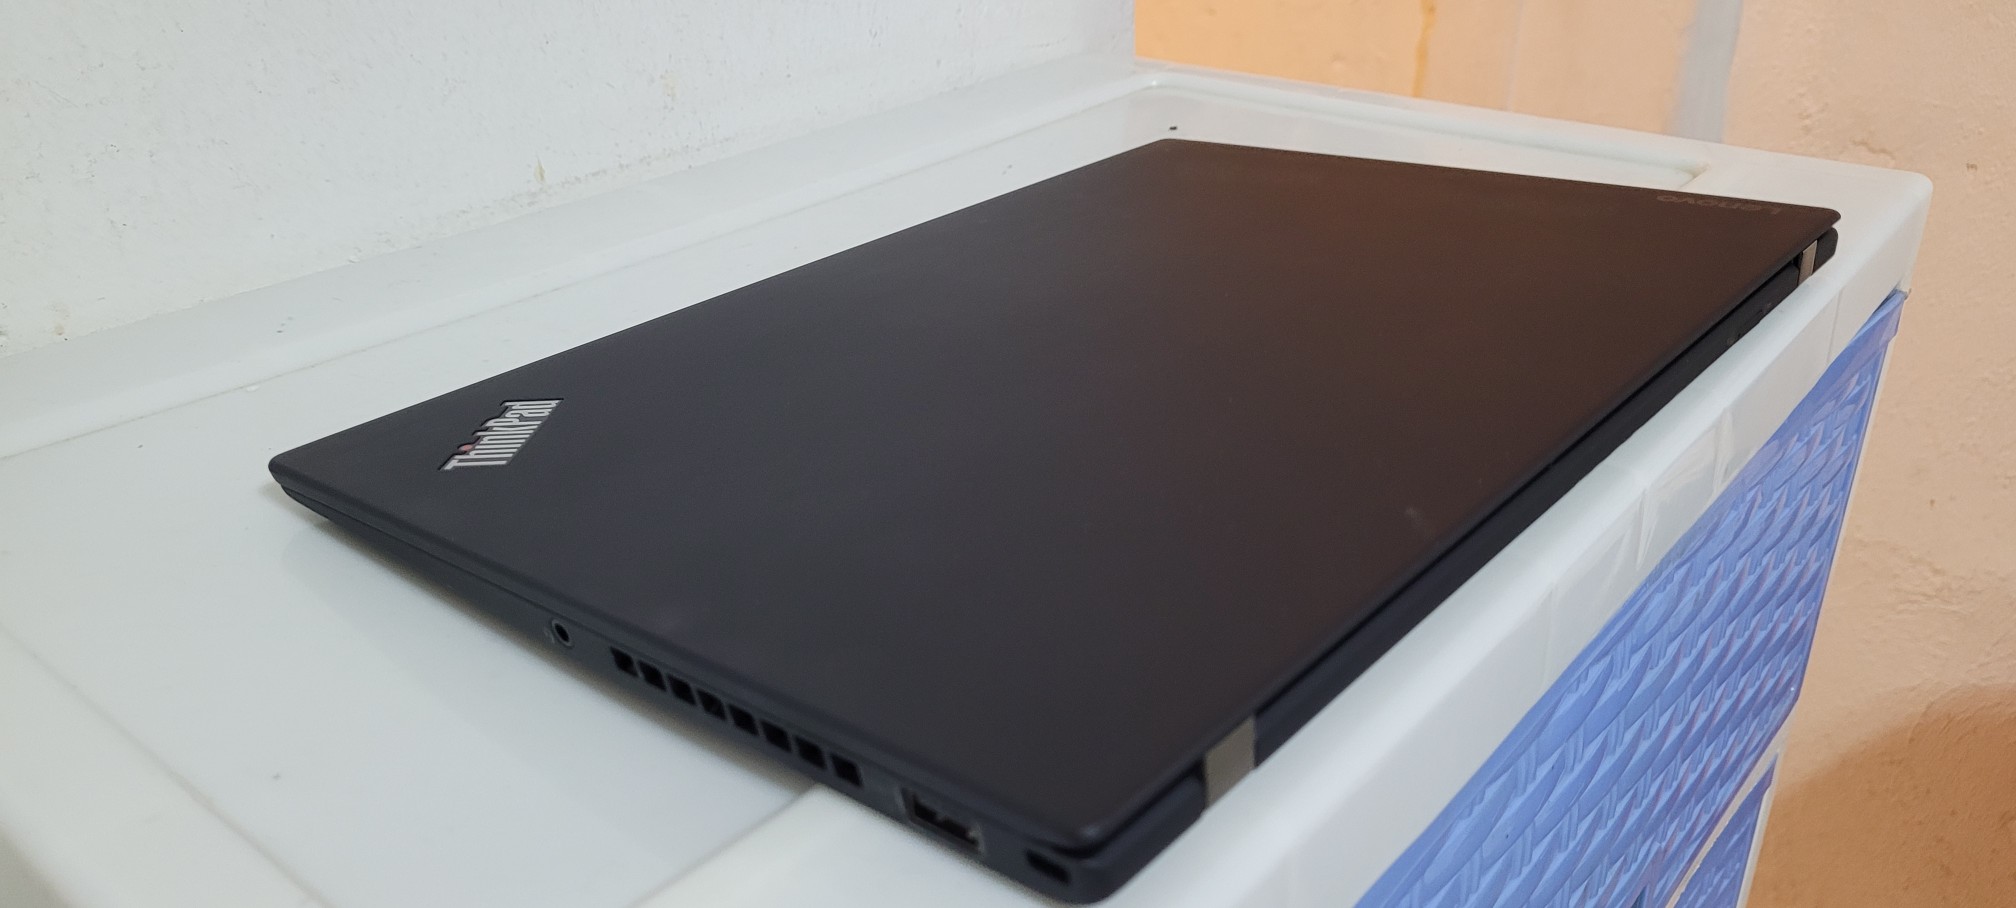 computadoras y laptops - laptop lenovo T490 14 Pulg Core i5 8va Gen Ram 16gb Disco 256gb SSD Video 8gb 2